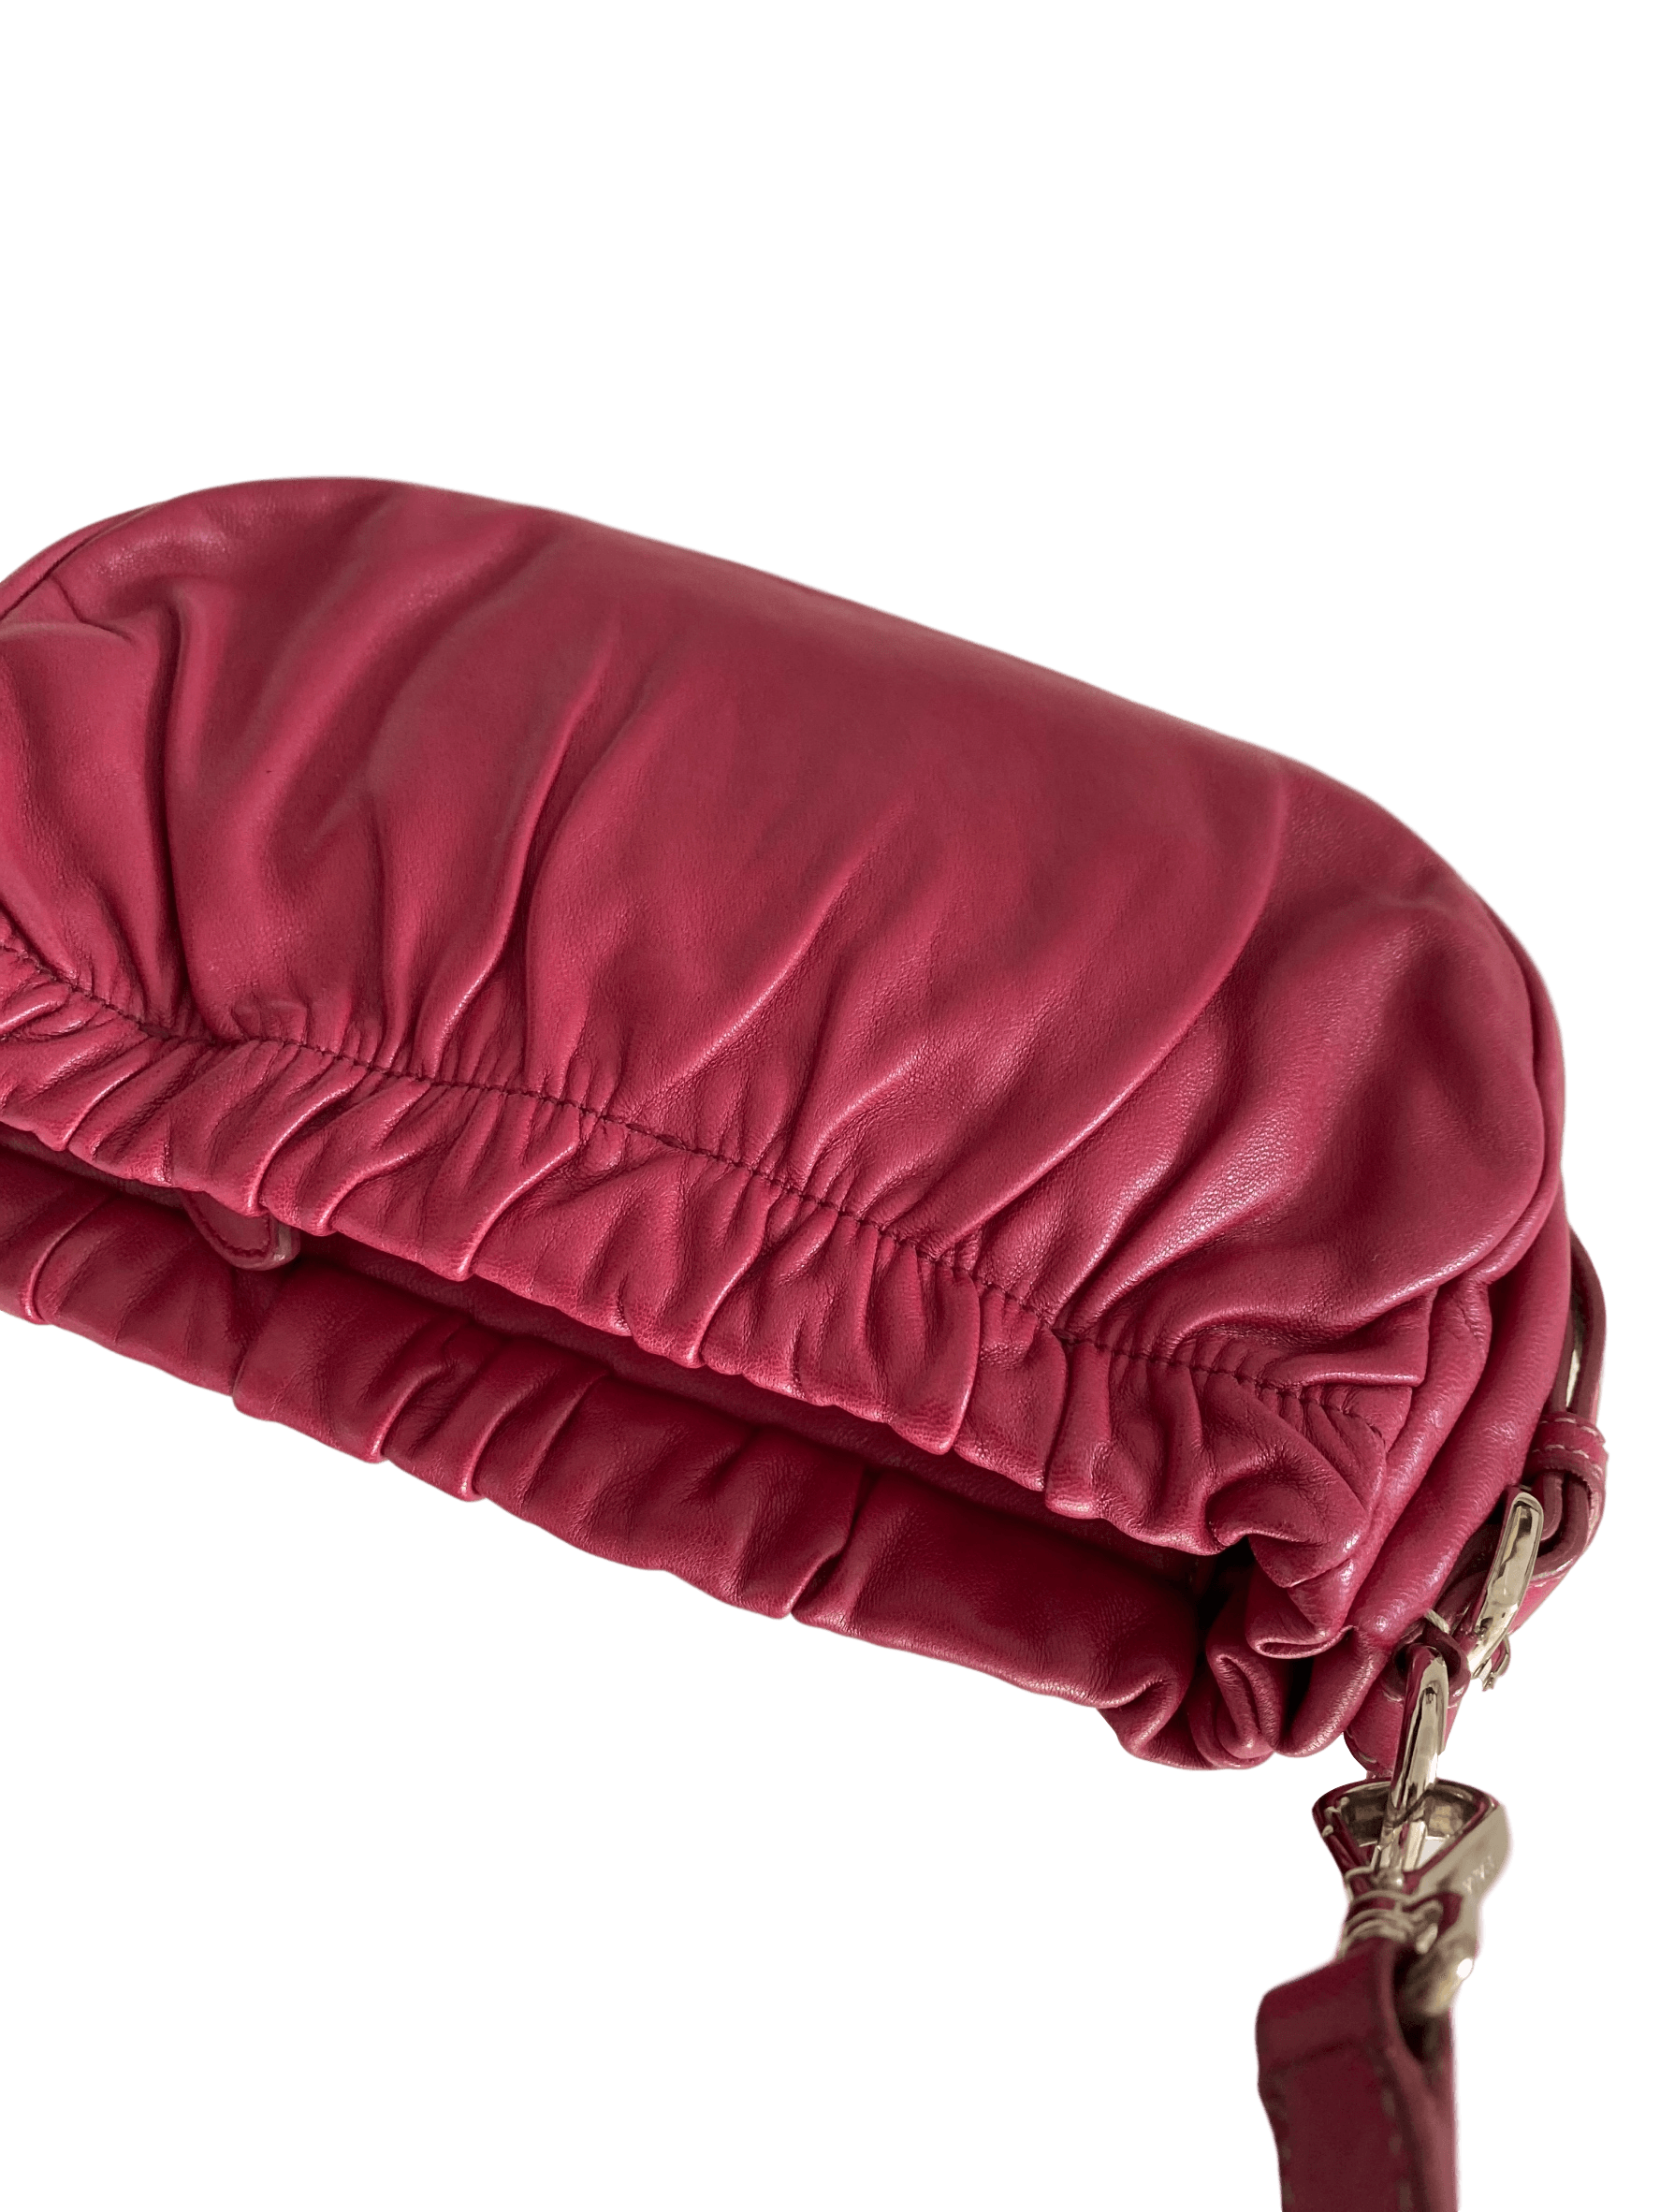 Prada Pink Leather Mini Bow Shoulder Bag - Handbags